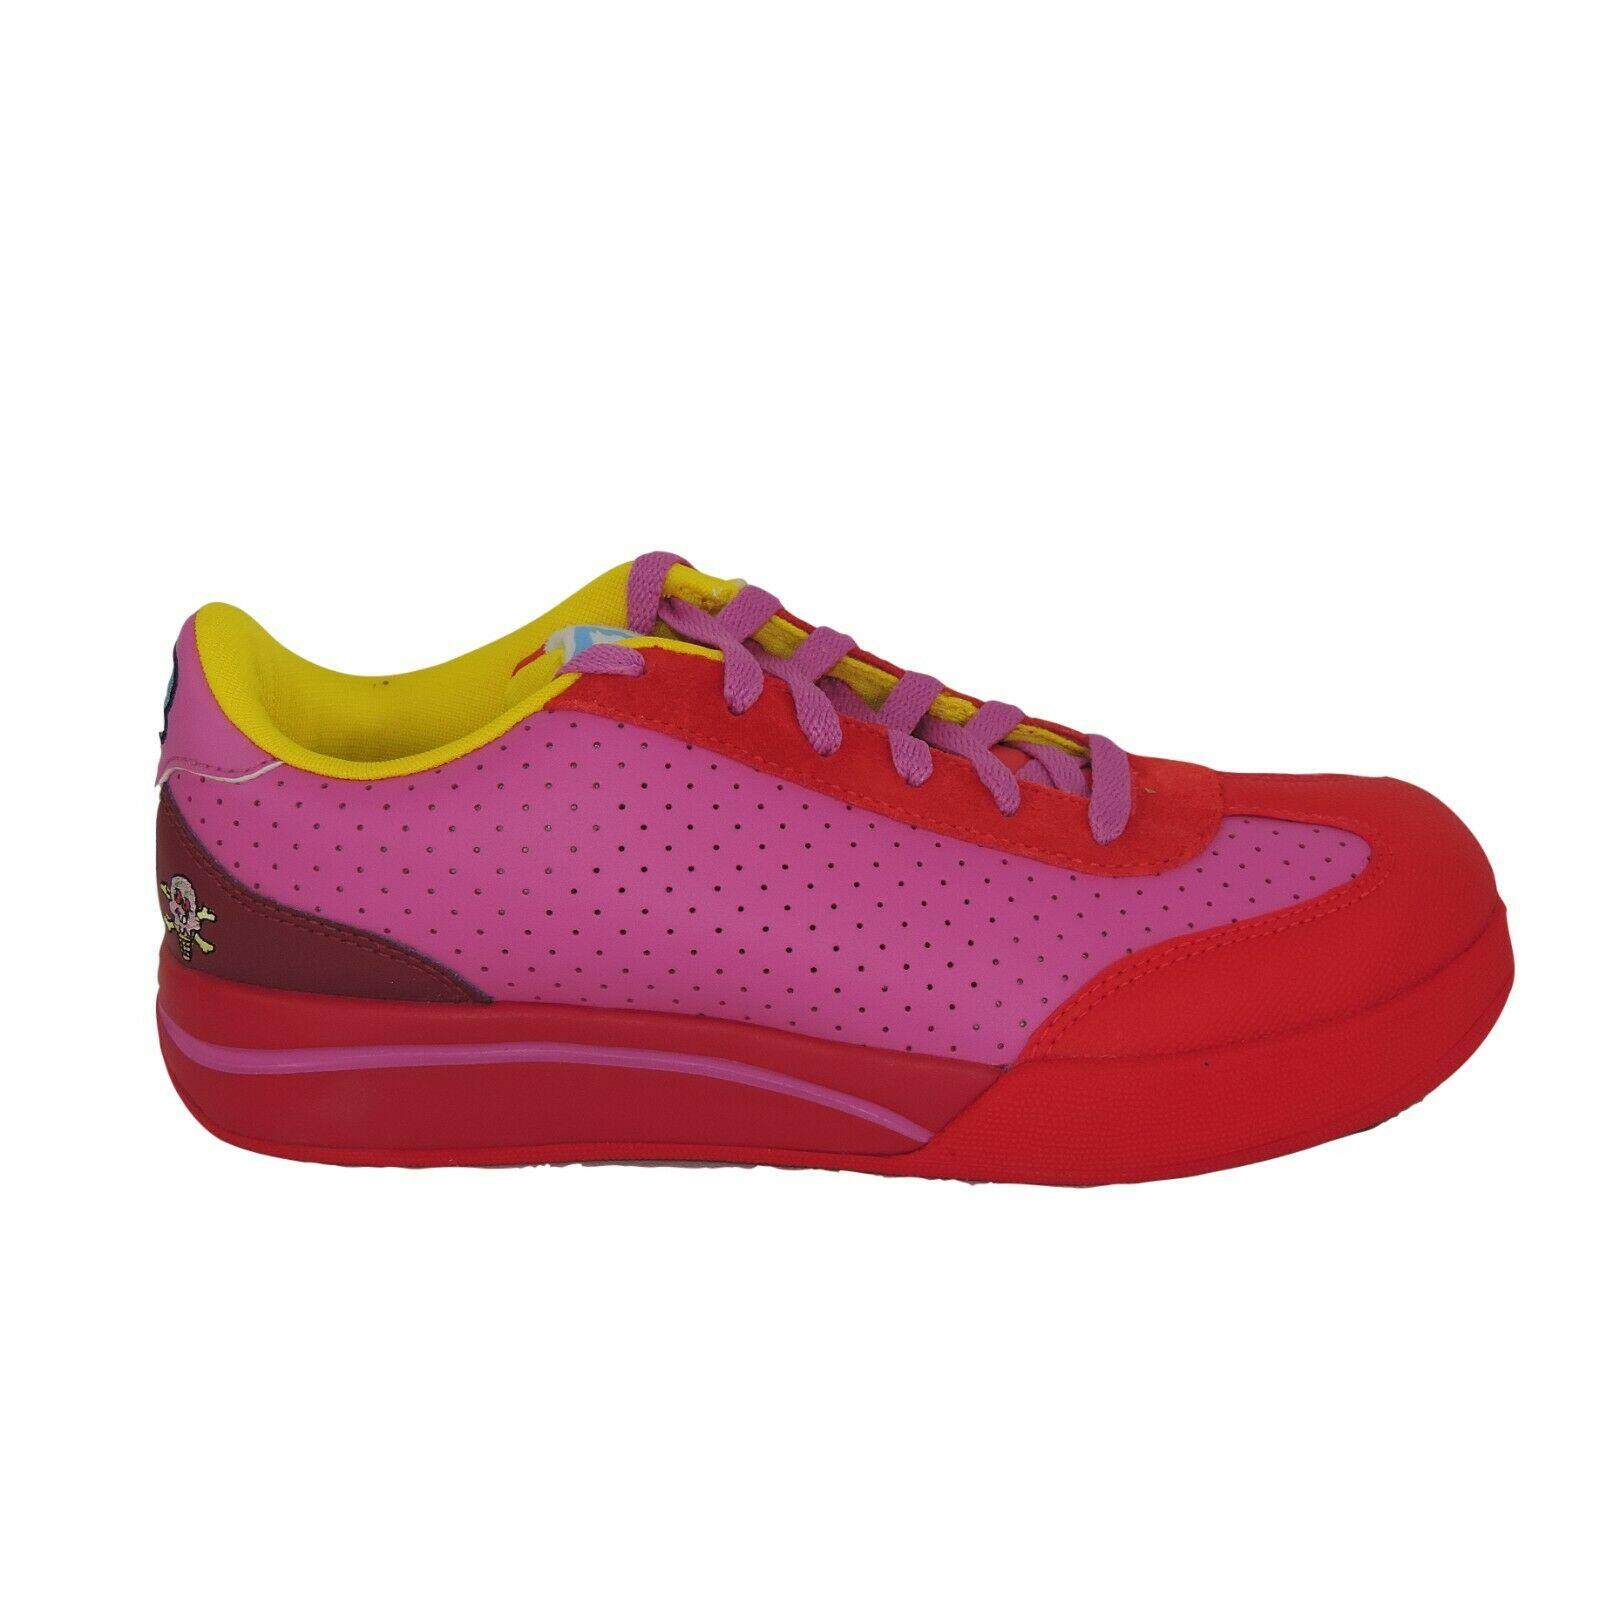 Reebok Ice Cream 75-161570 Boys Shoes Pink Vintage Leather Sneakers Sport SZ 6